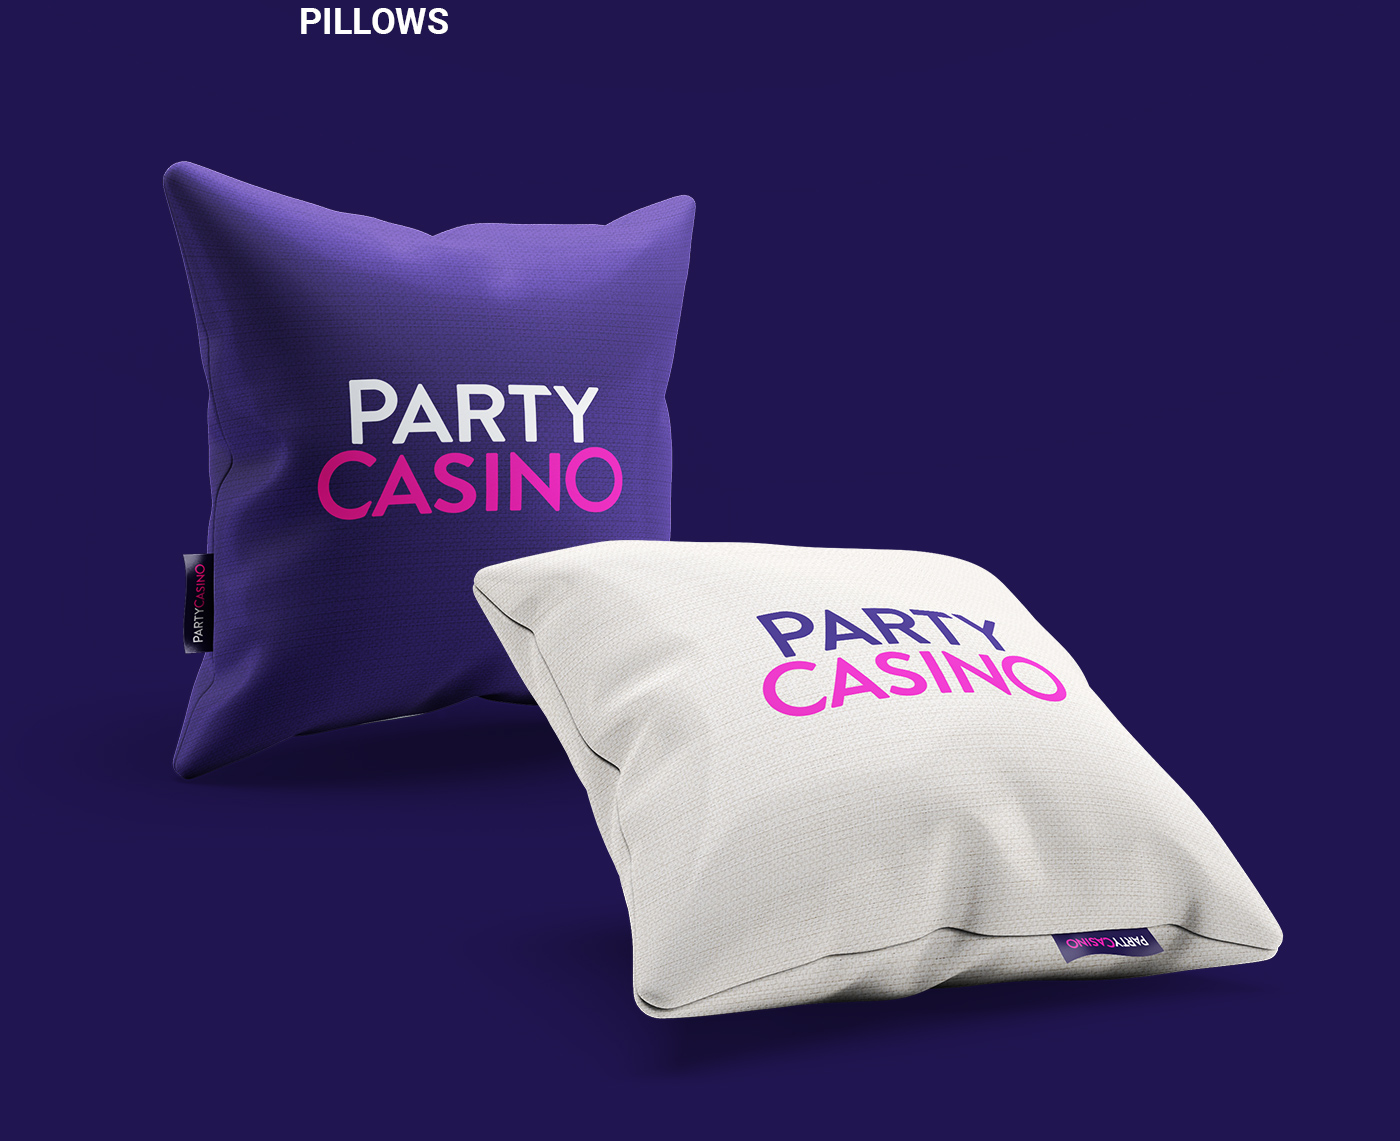 PartyCasino Event PartyCasinoInIbiza Event Campaign online campaign PartyCasino Design PartyCasino Rebranding